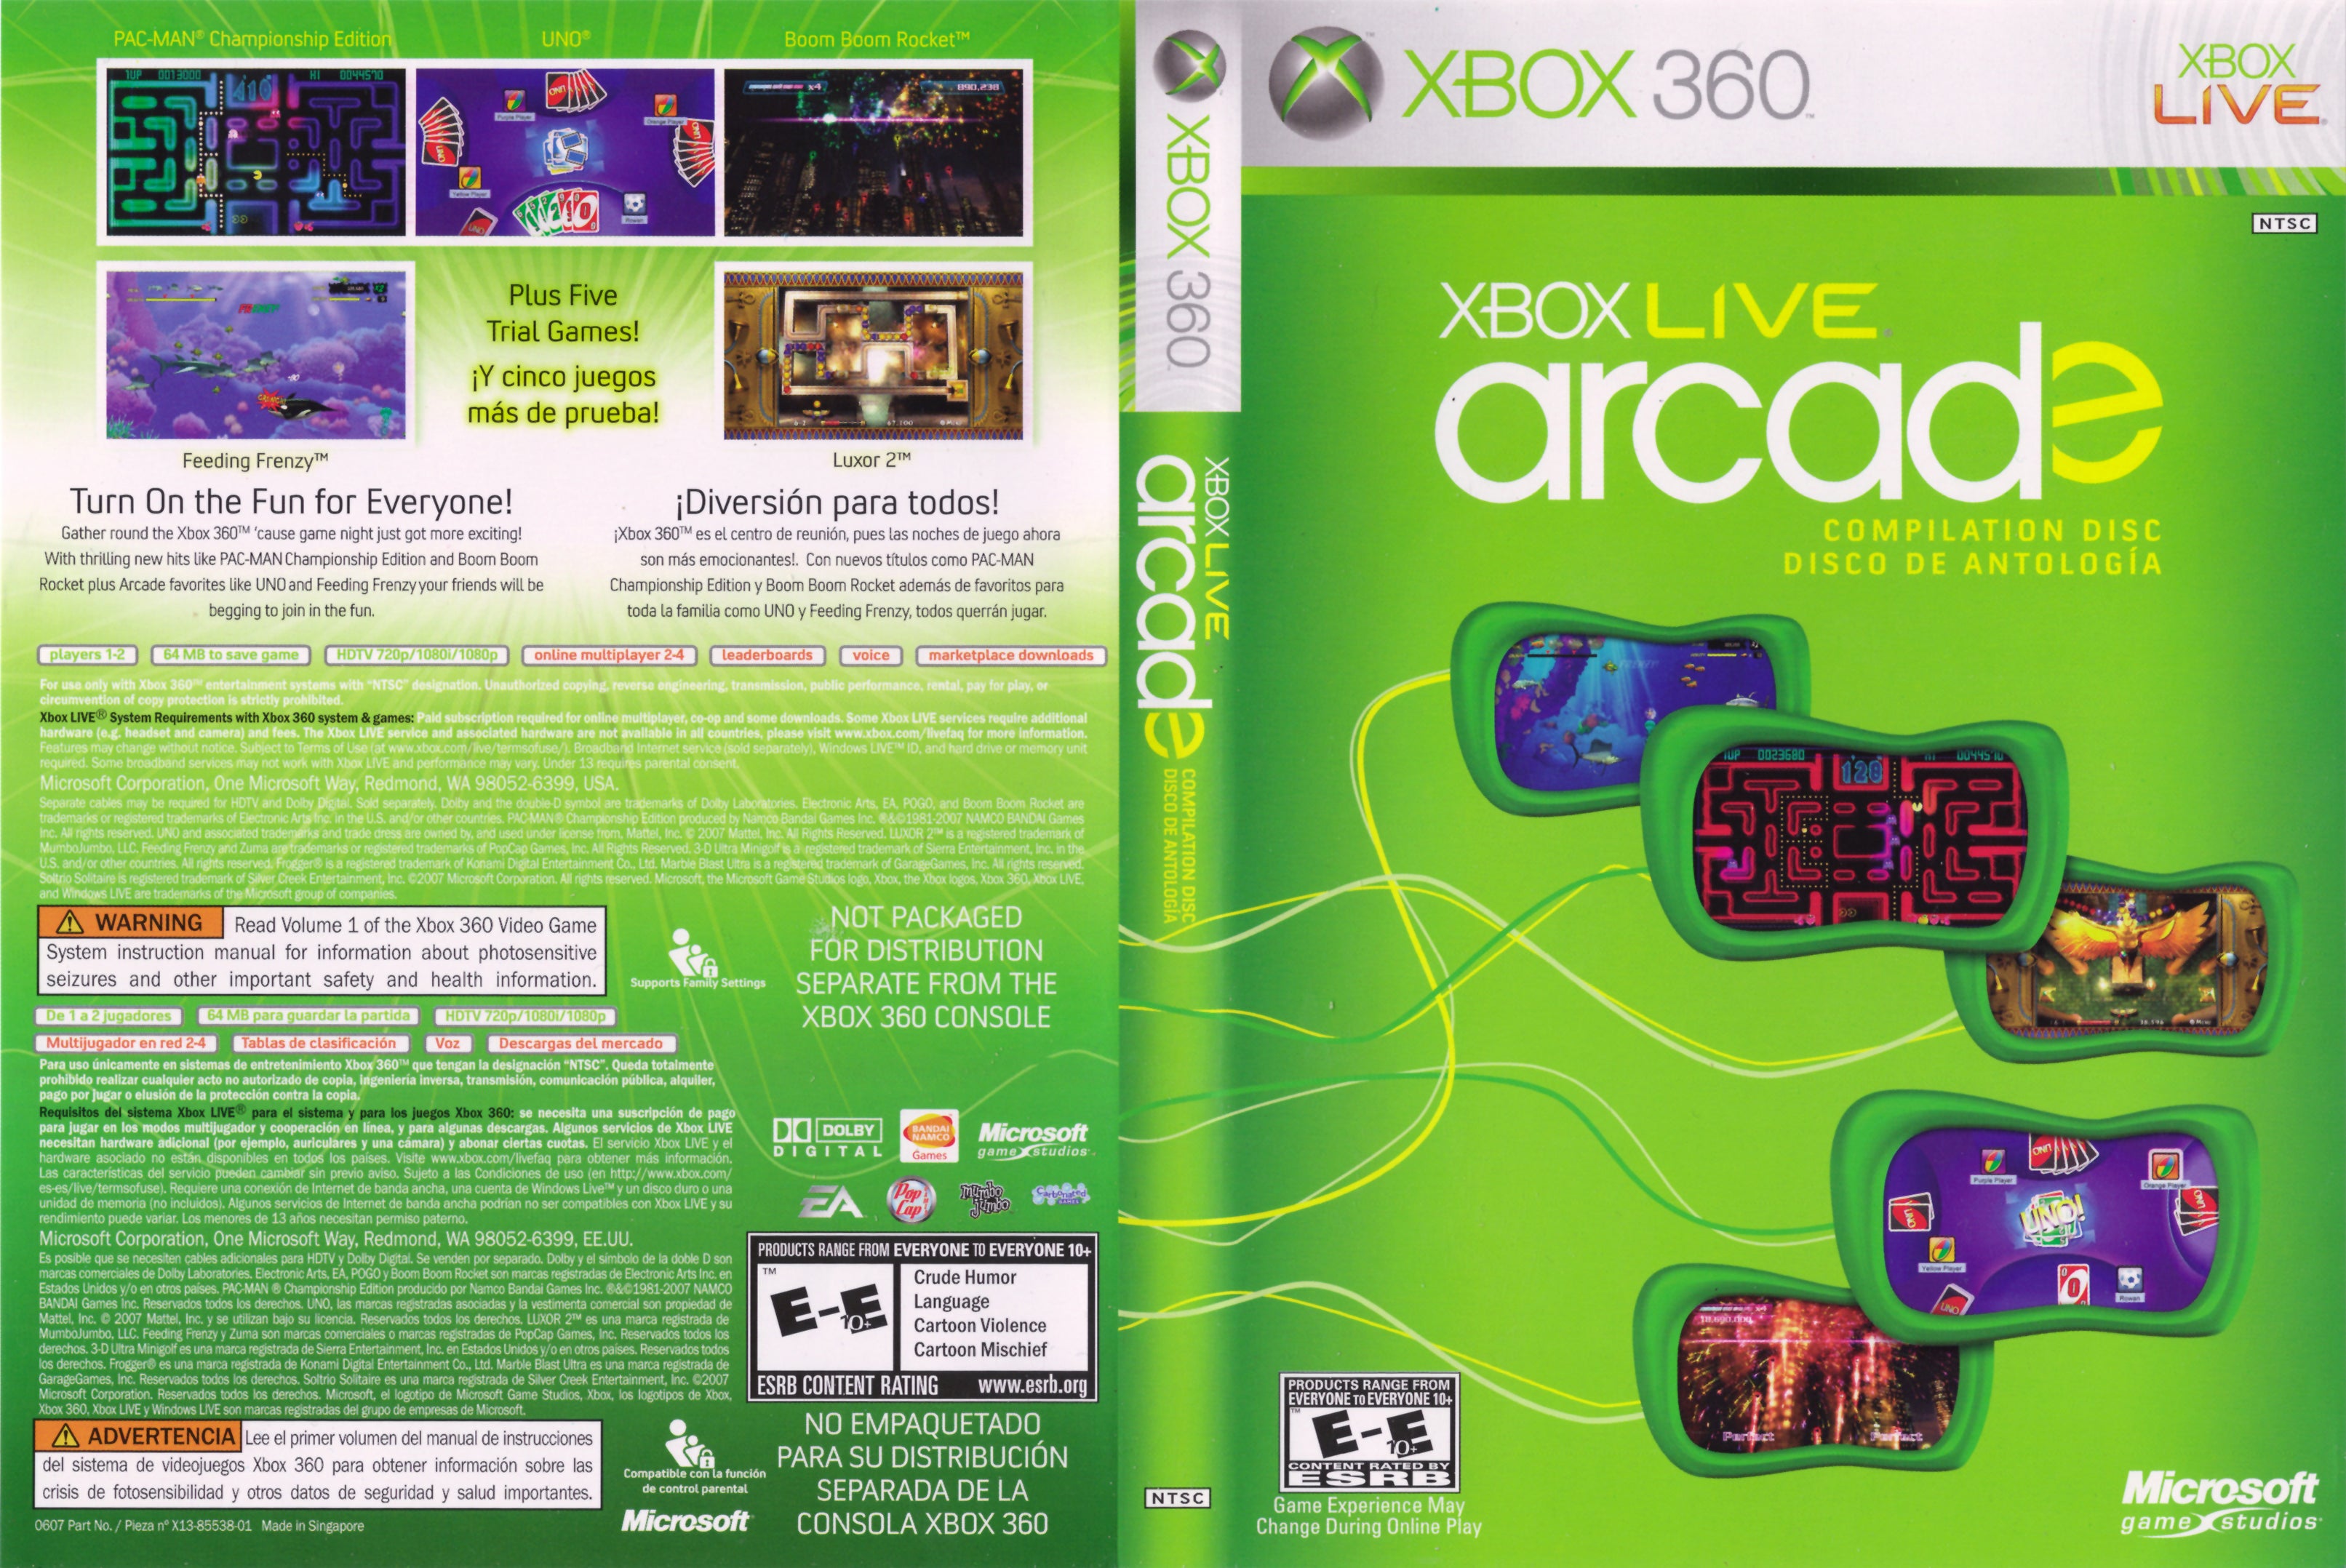 Game xbox live. Xbox Live Xbox 360. Xbox Arcade 360 игры диск. Xbox 360 Arcade. Xbox Live Arcade Compilation Disc для Xbox 360.